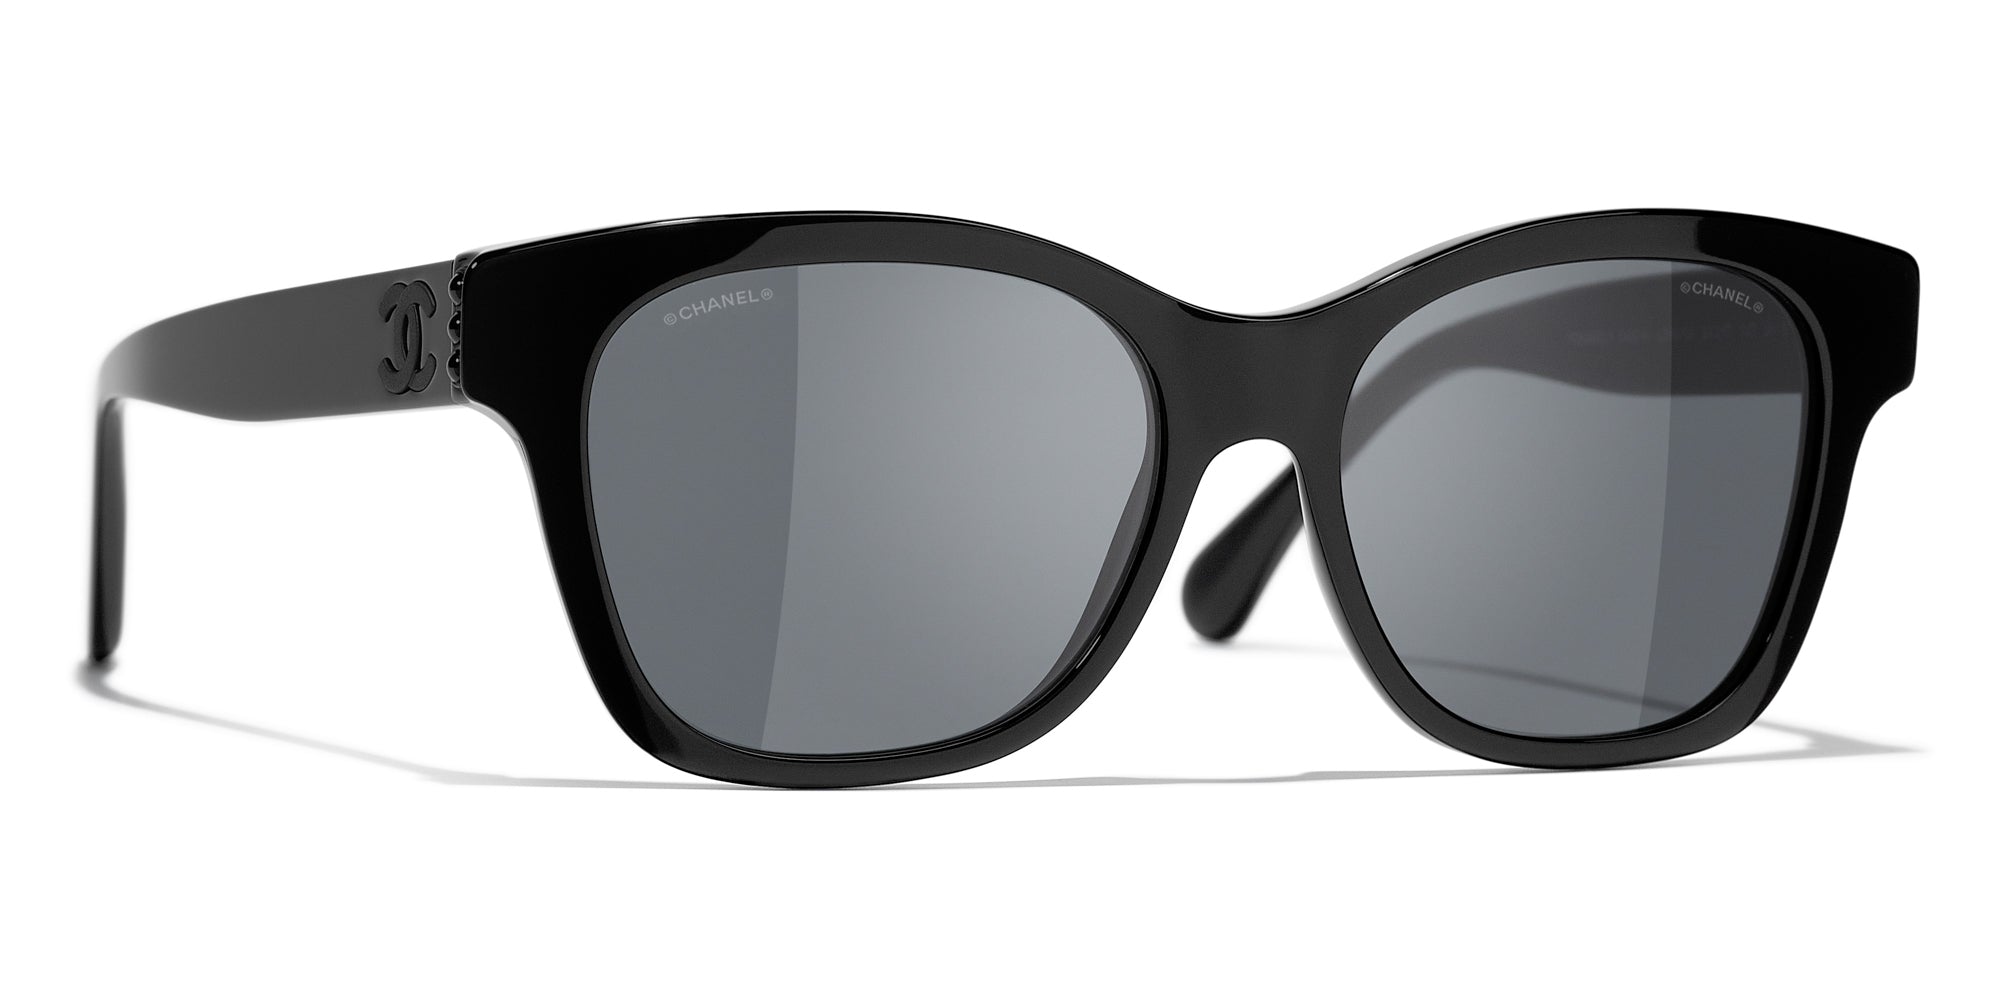 Chanel 5488 Sunglasses Black/Grey Rectangle Women